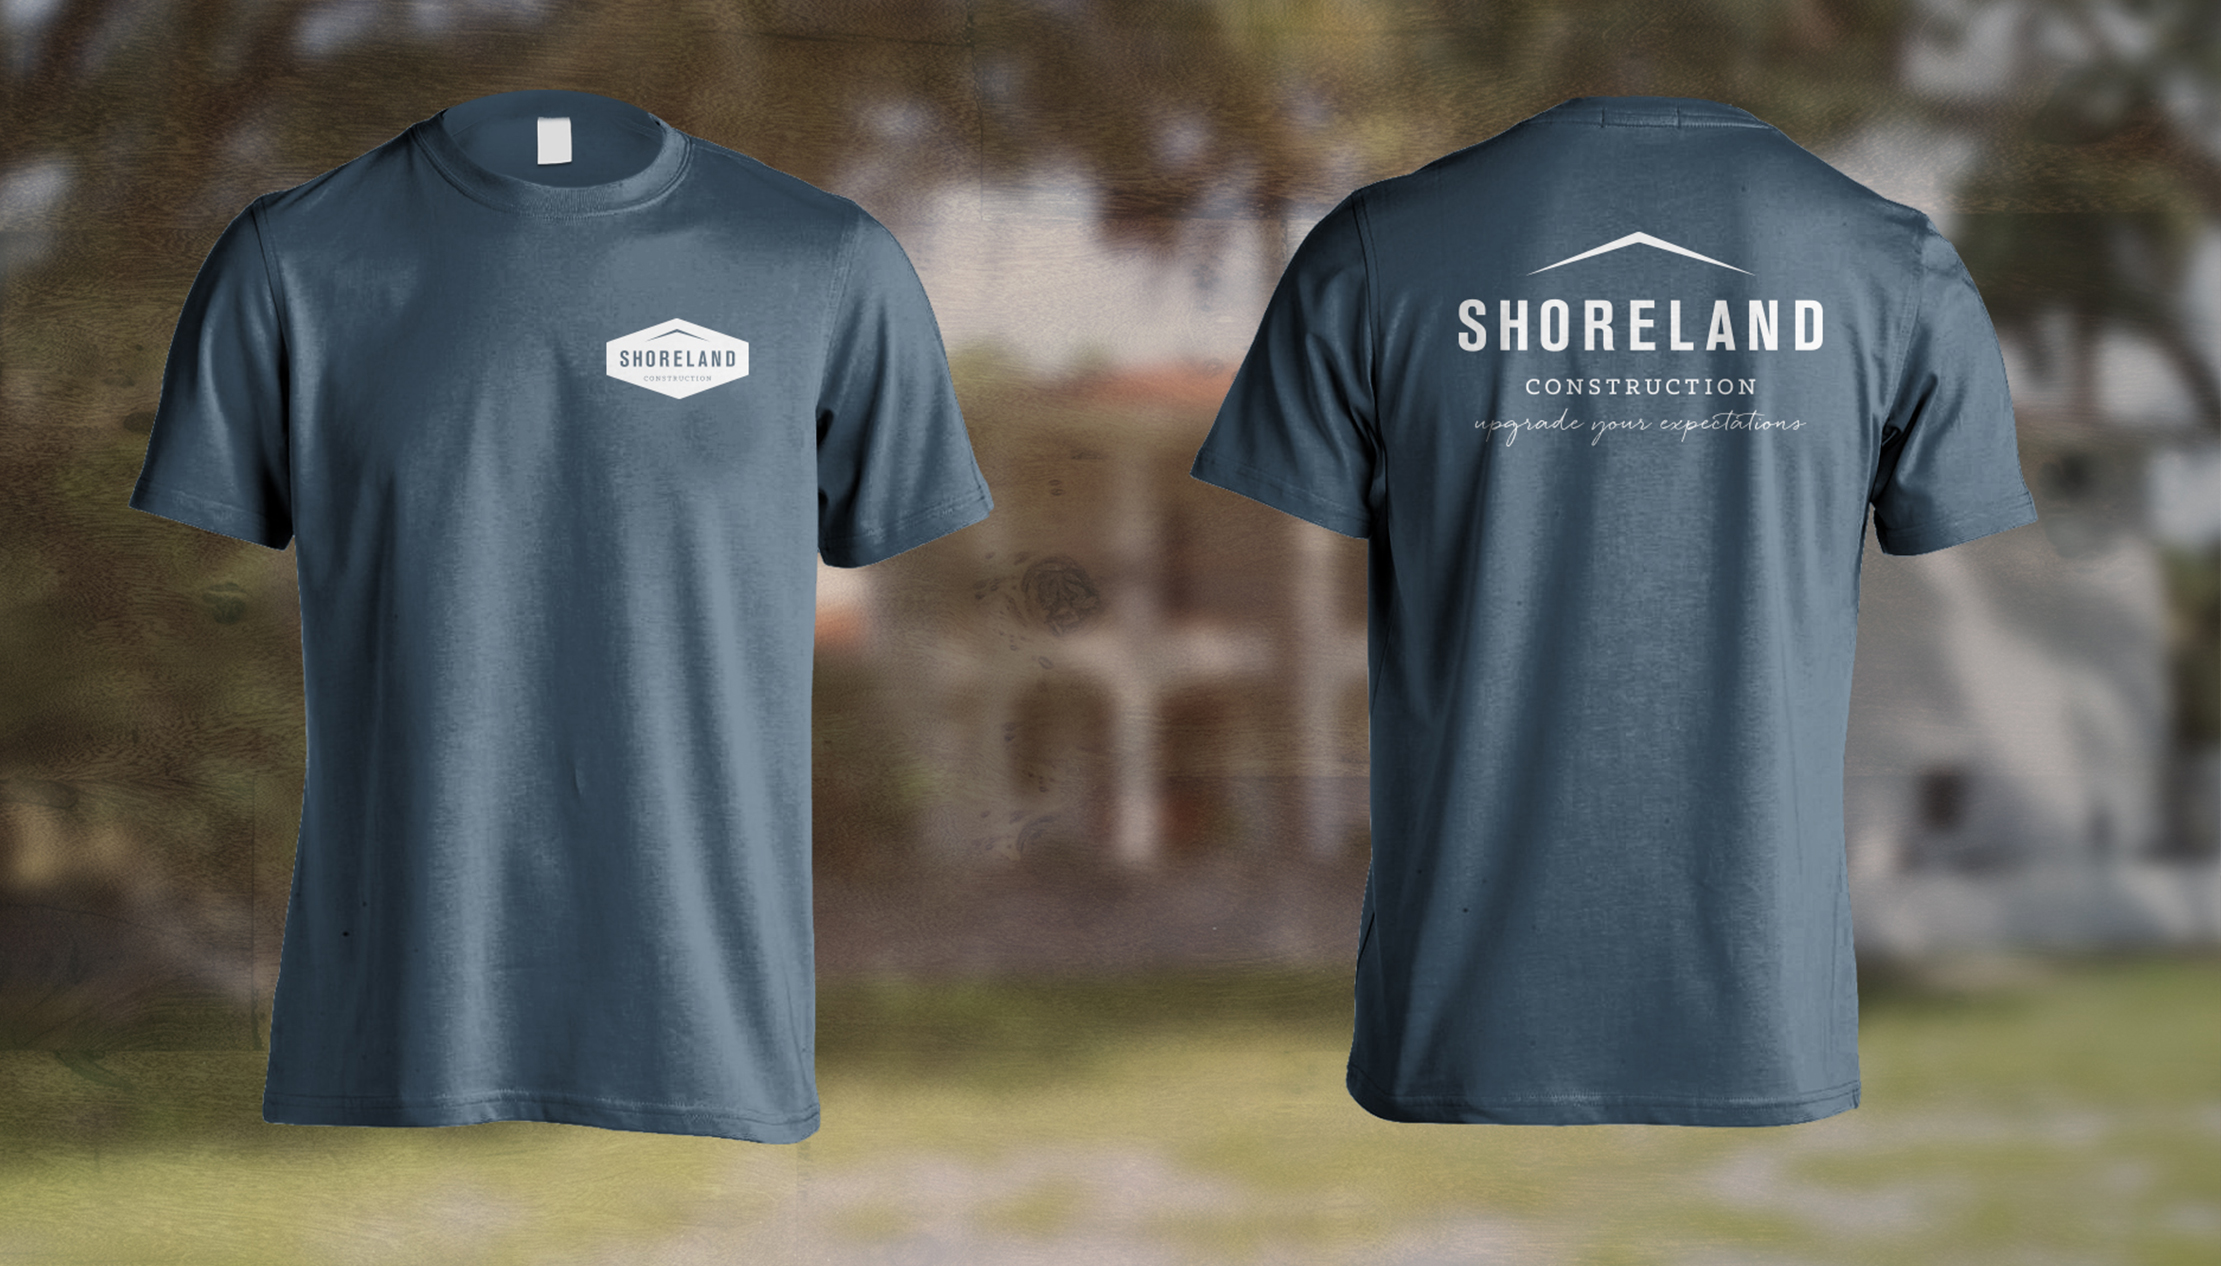 Shoreland Construction Branding Tee Shirts by Just Make Things